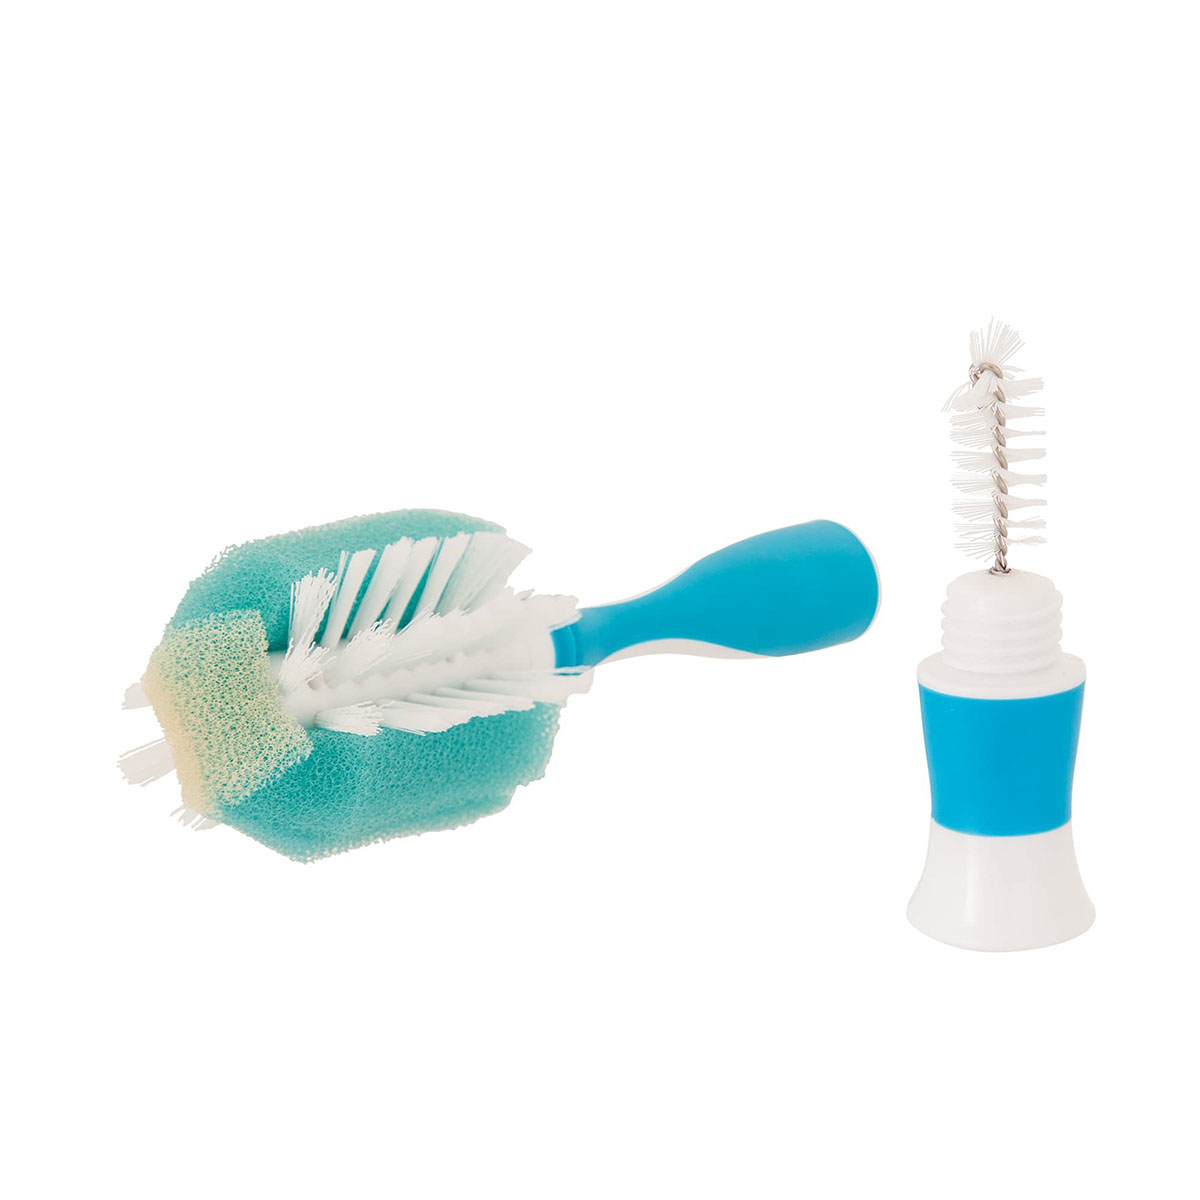 NUK bottle brush bristles Sponge housewares baby toddler design product